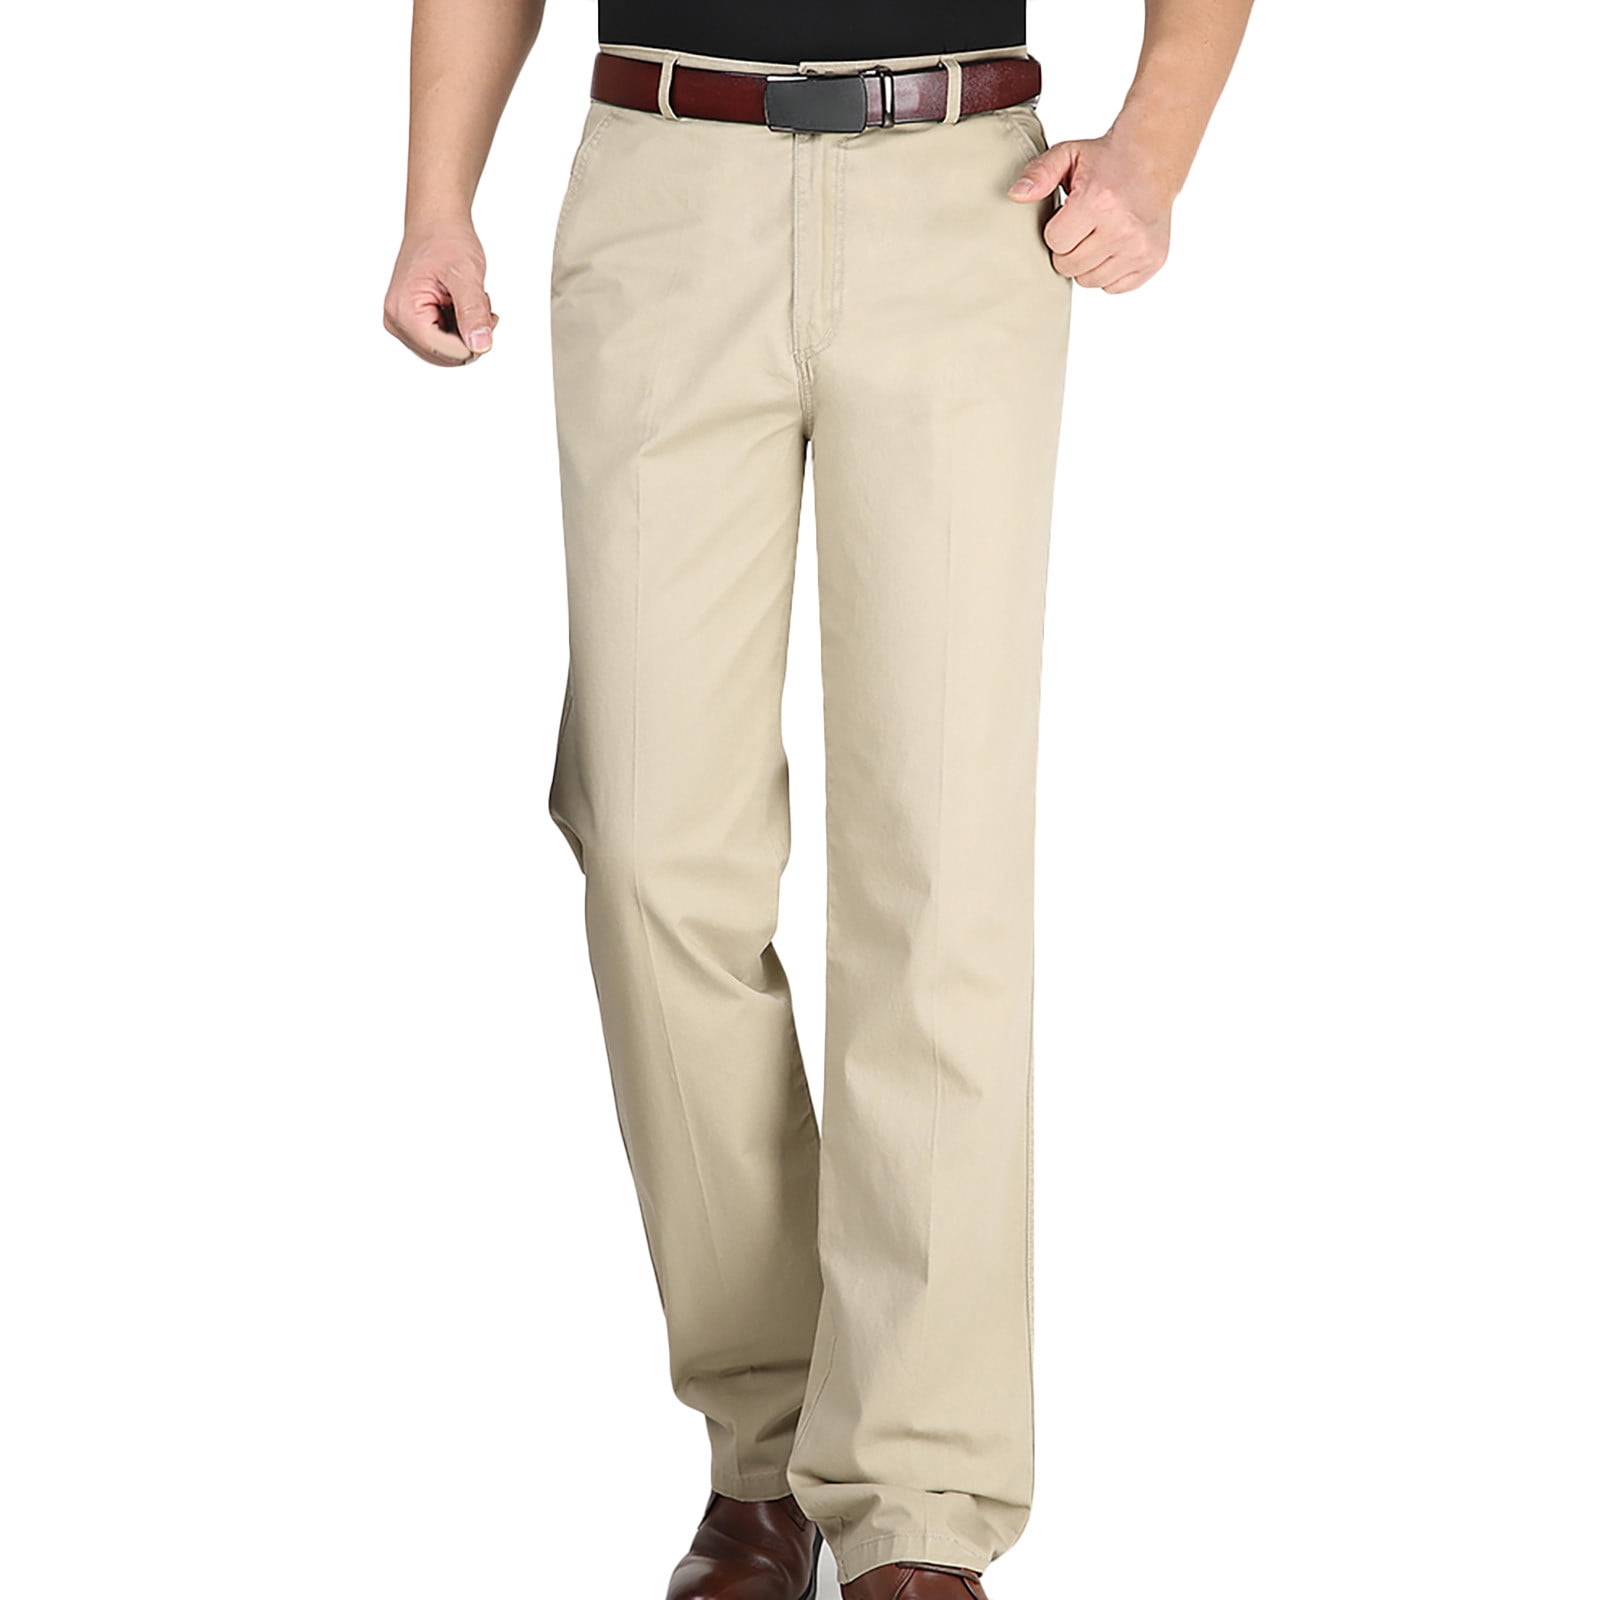 Dockers Wrinkle-Free Pants Comfort Khakis Pleated Relaxed Fit 478760002  Khaki/Tan | DockersUSA